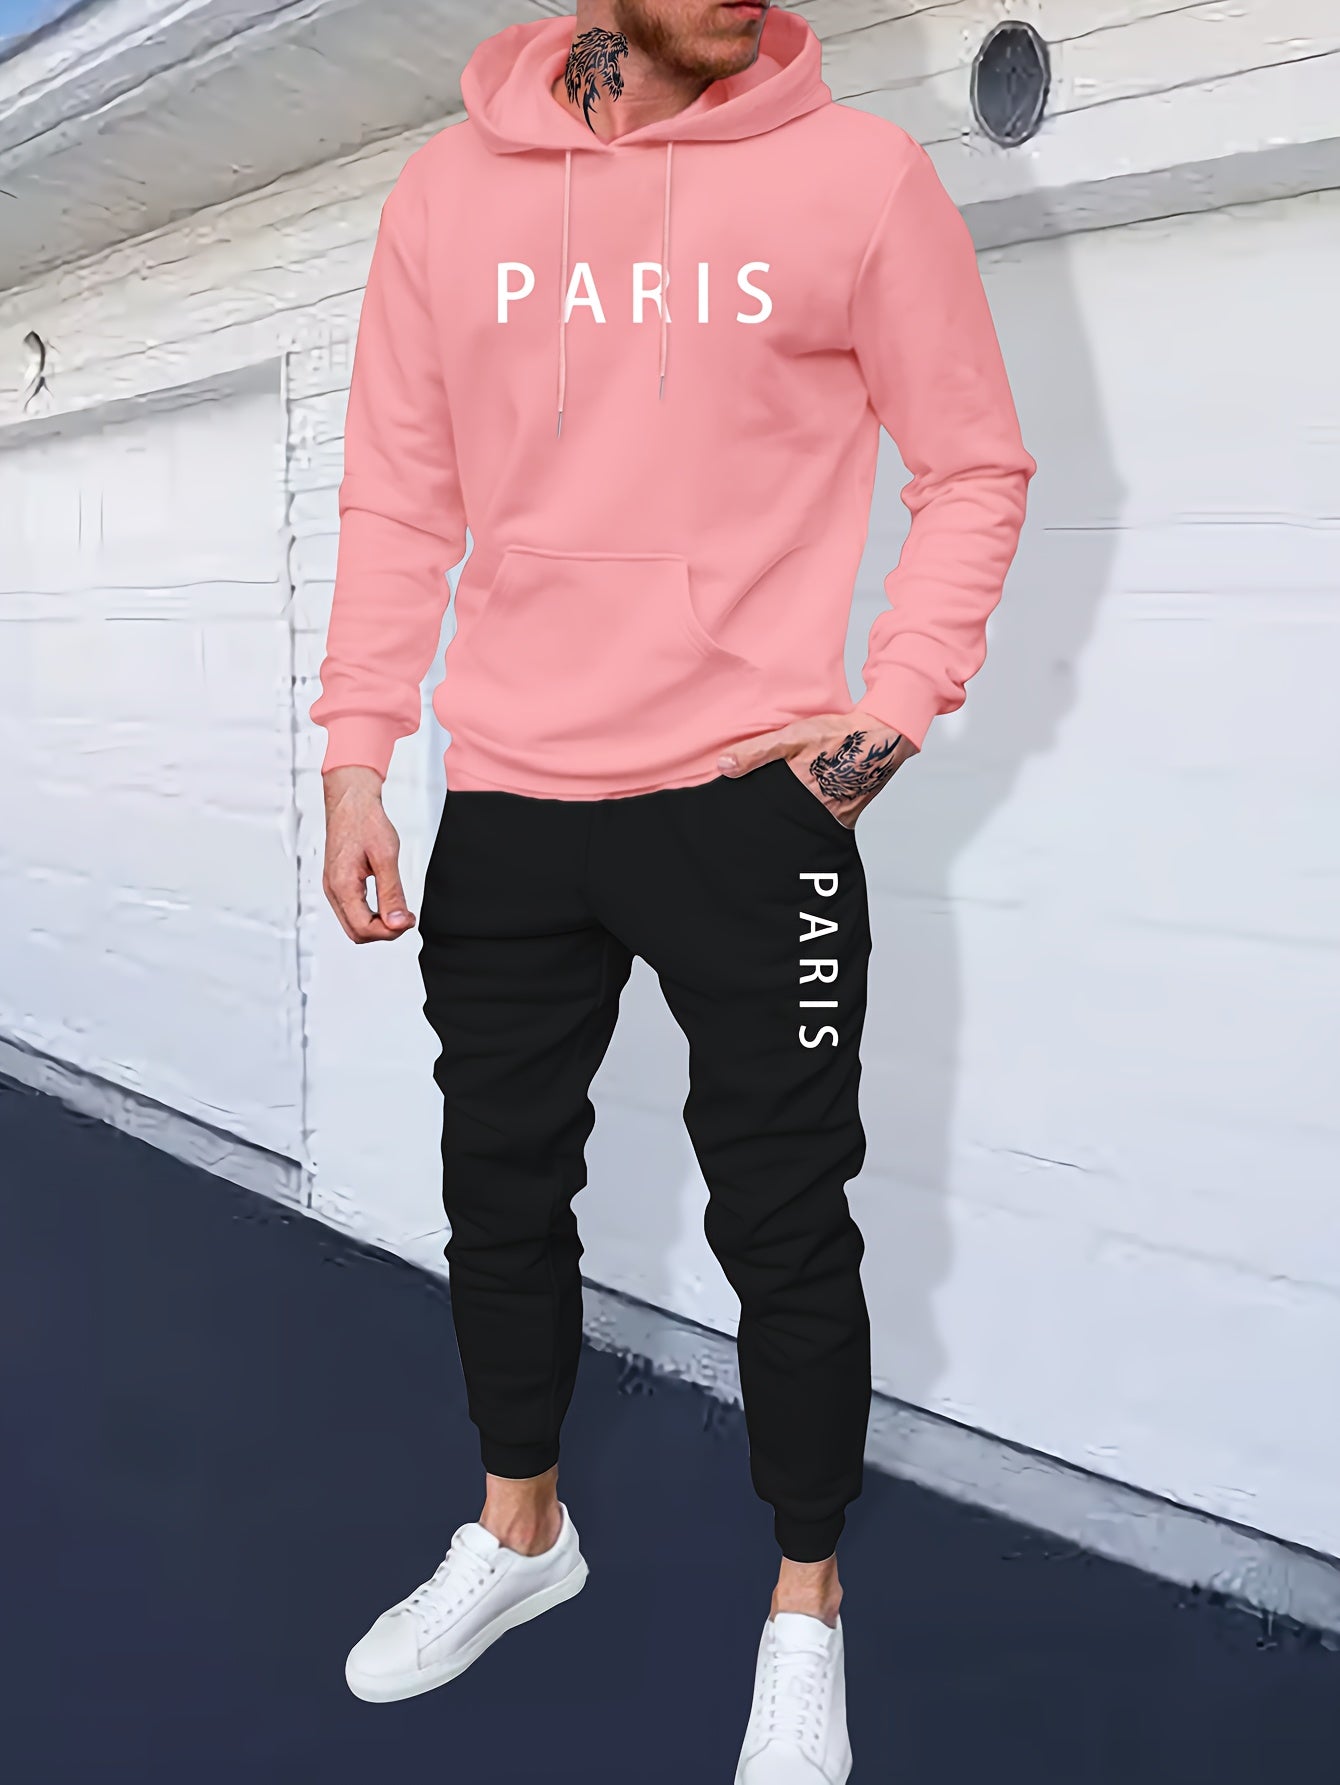 Casual 2pcs Set, Men's "Paris" Print Hoodie & Drawstring Sweatpants Matching Set For Fall Winter